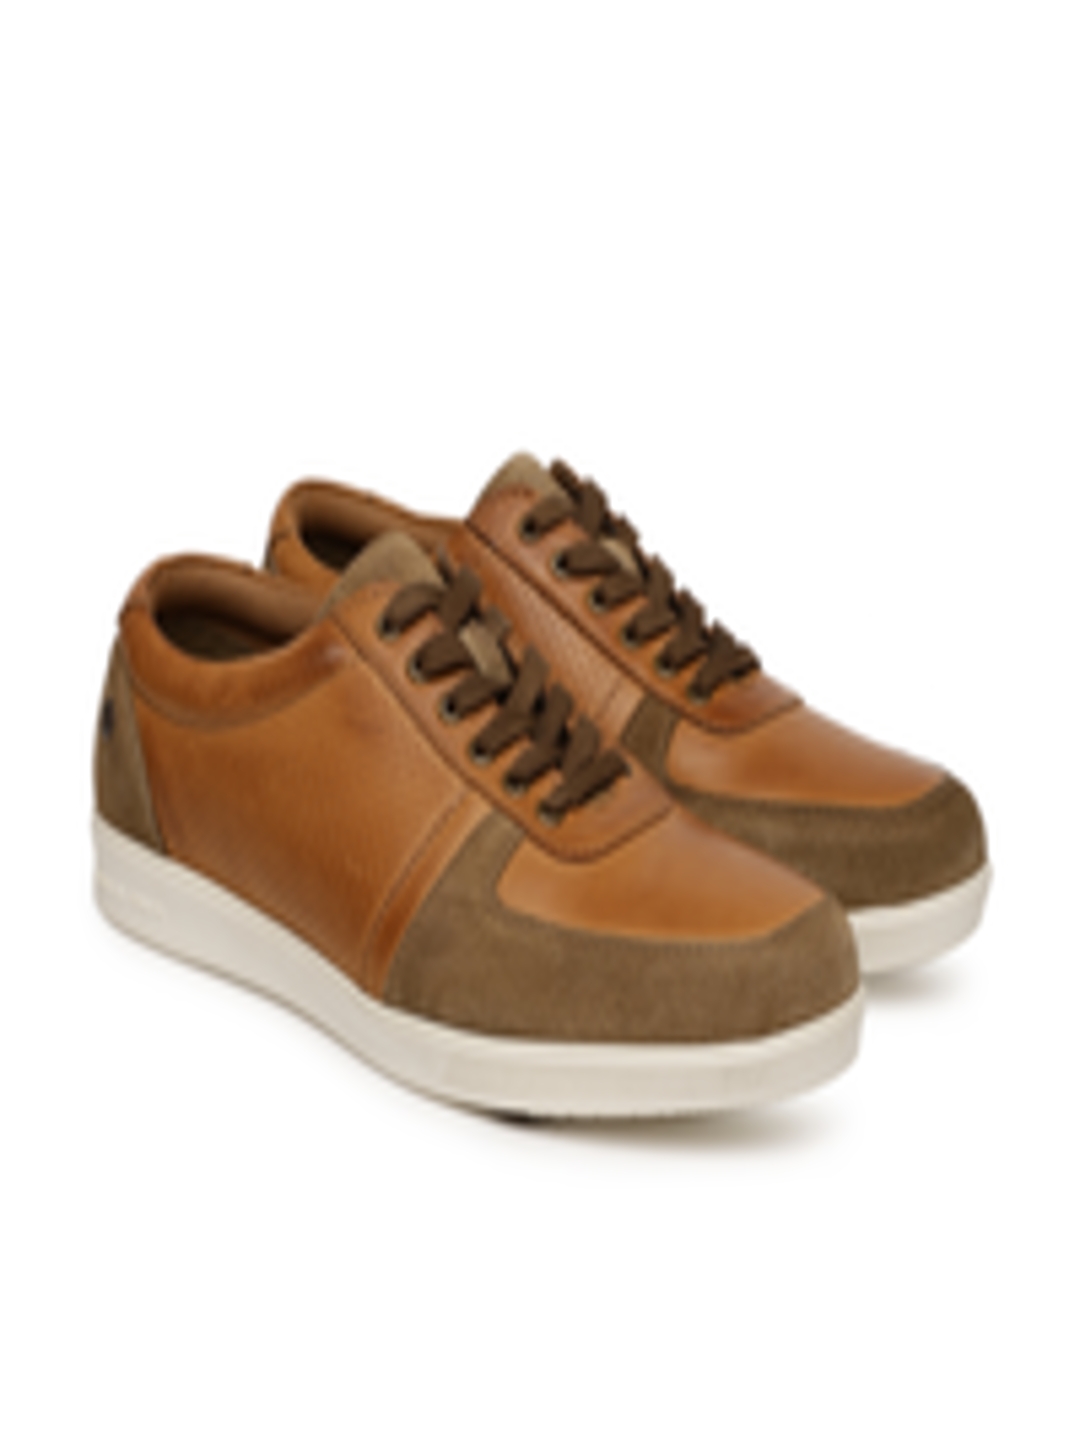 Buy Jack & Jones Men Tan Sneakers - Casual Shoes for Men 4452747 | Myntra